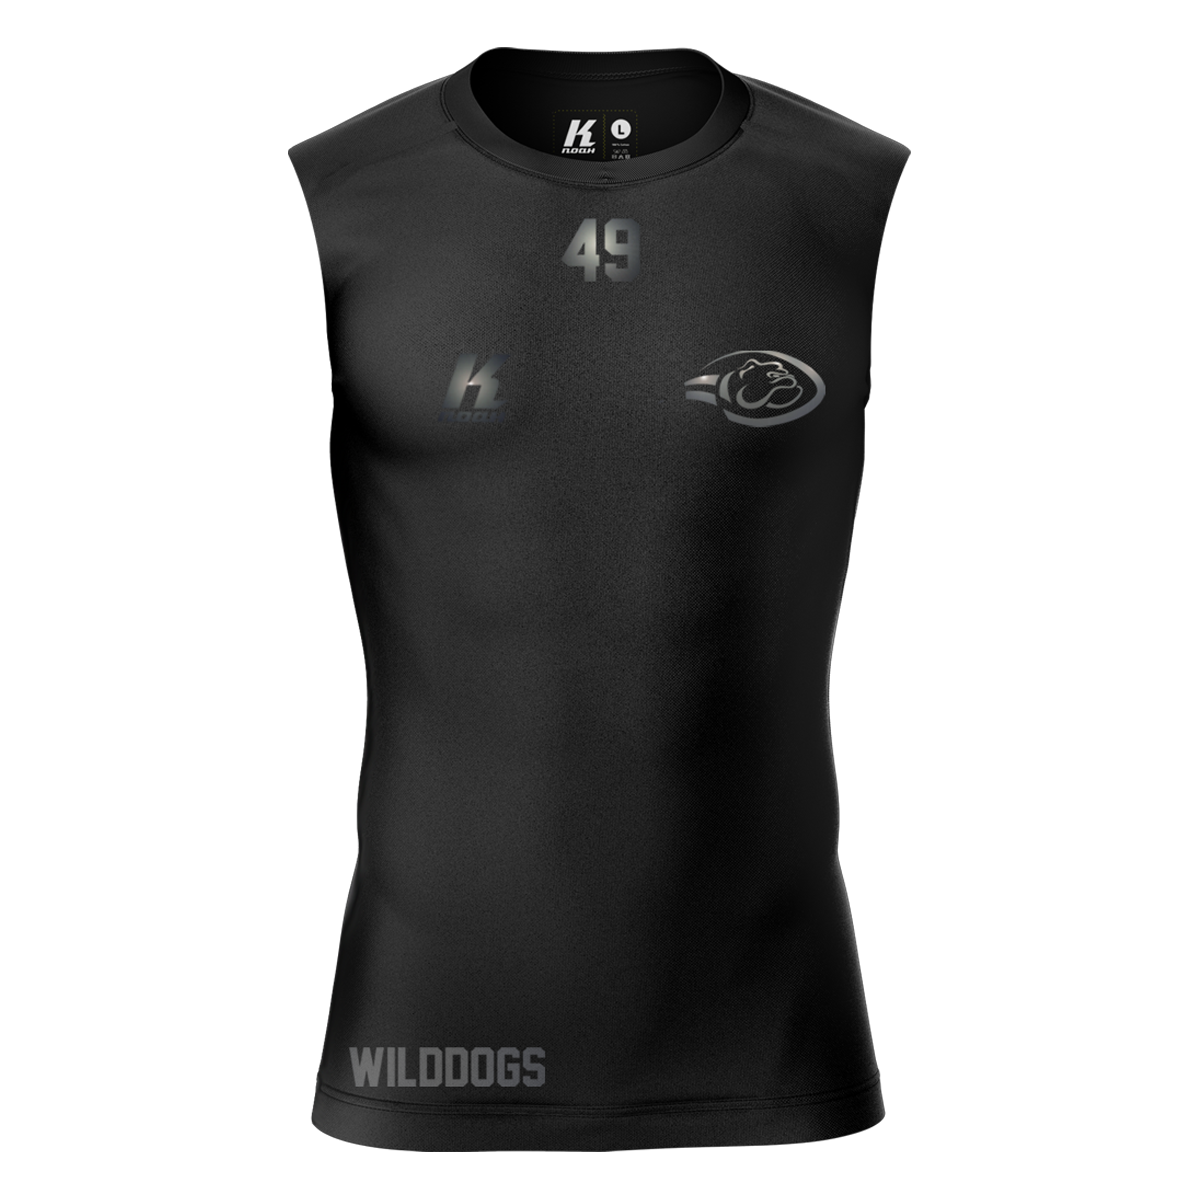 Wilddogs "Blackline" K.Tech Compression Sleeveless Shirt with Playernumber/Initials